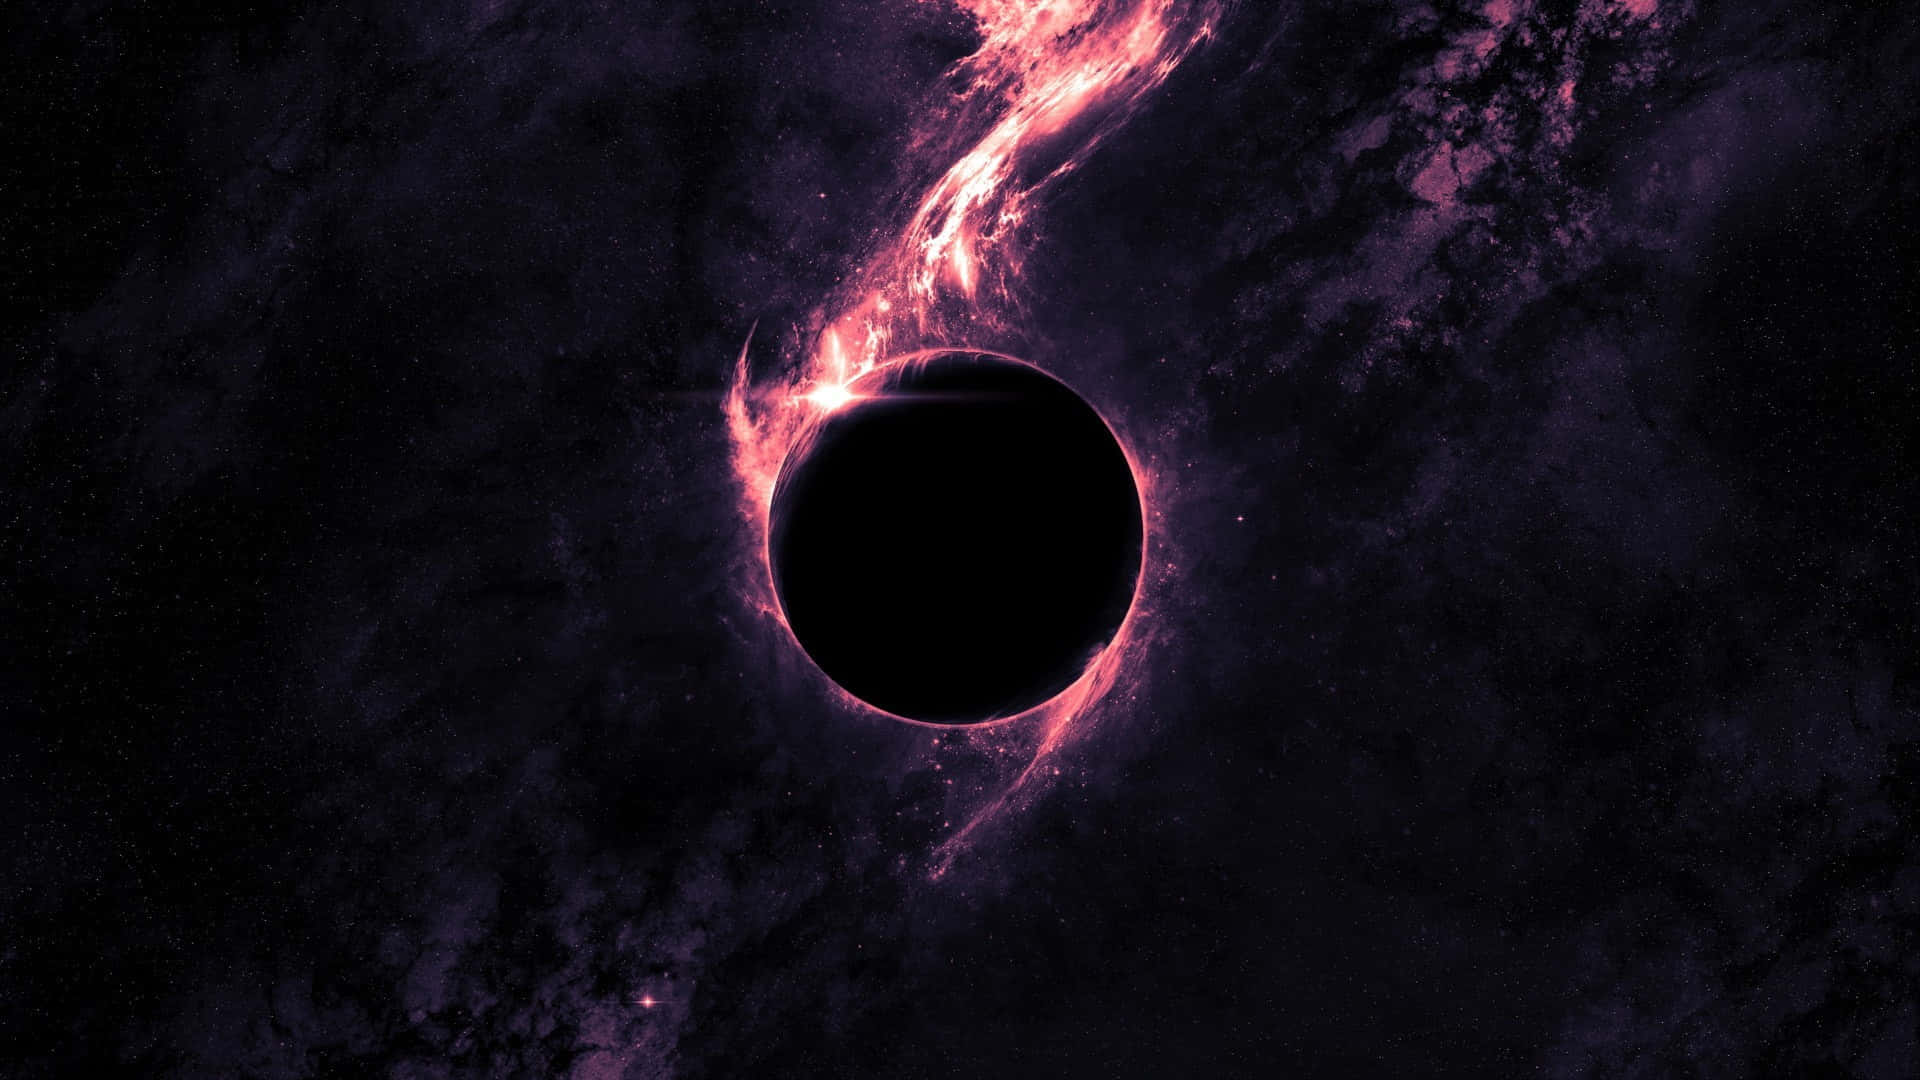 A cosmic wonder - a breathtaking black and purple galaxy. Wallpaper